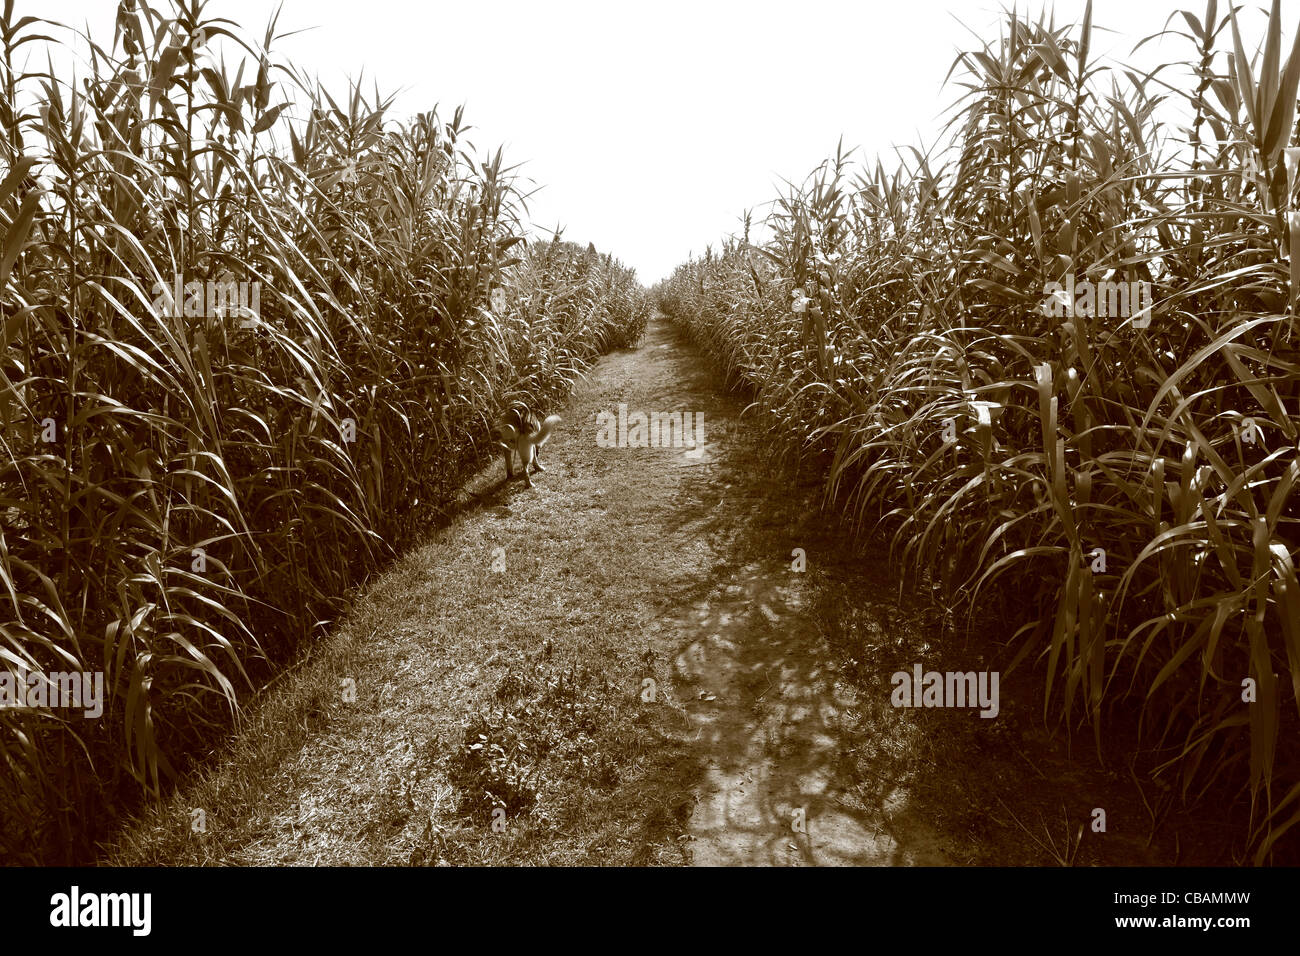 A path through the reeds Stock Photo